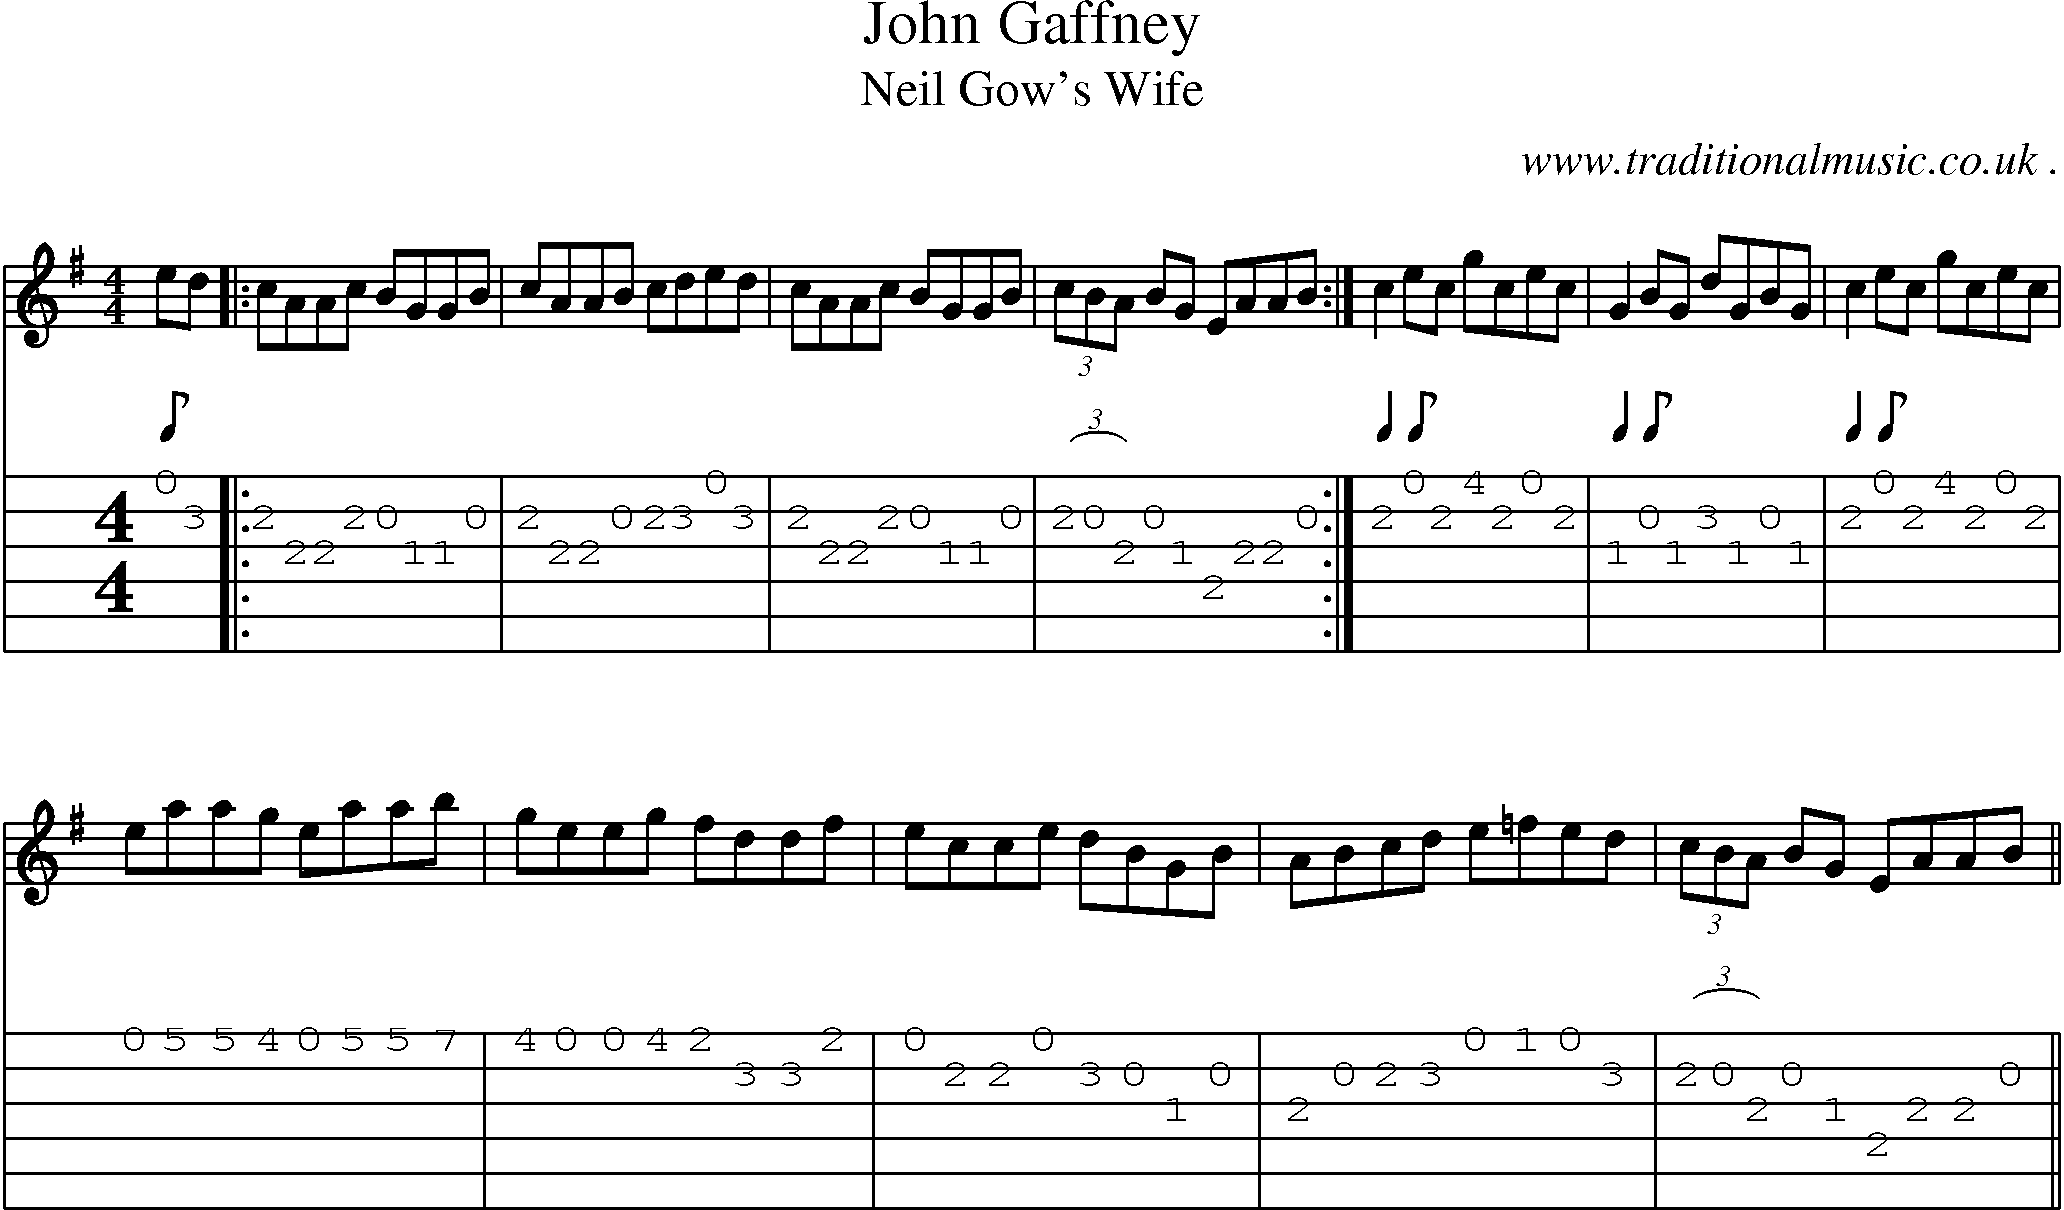 Sheet-Music and Guitar Tabs for John Gaffney